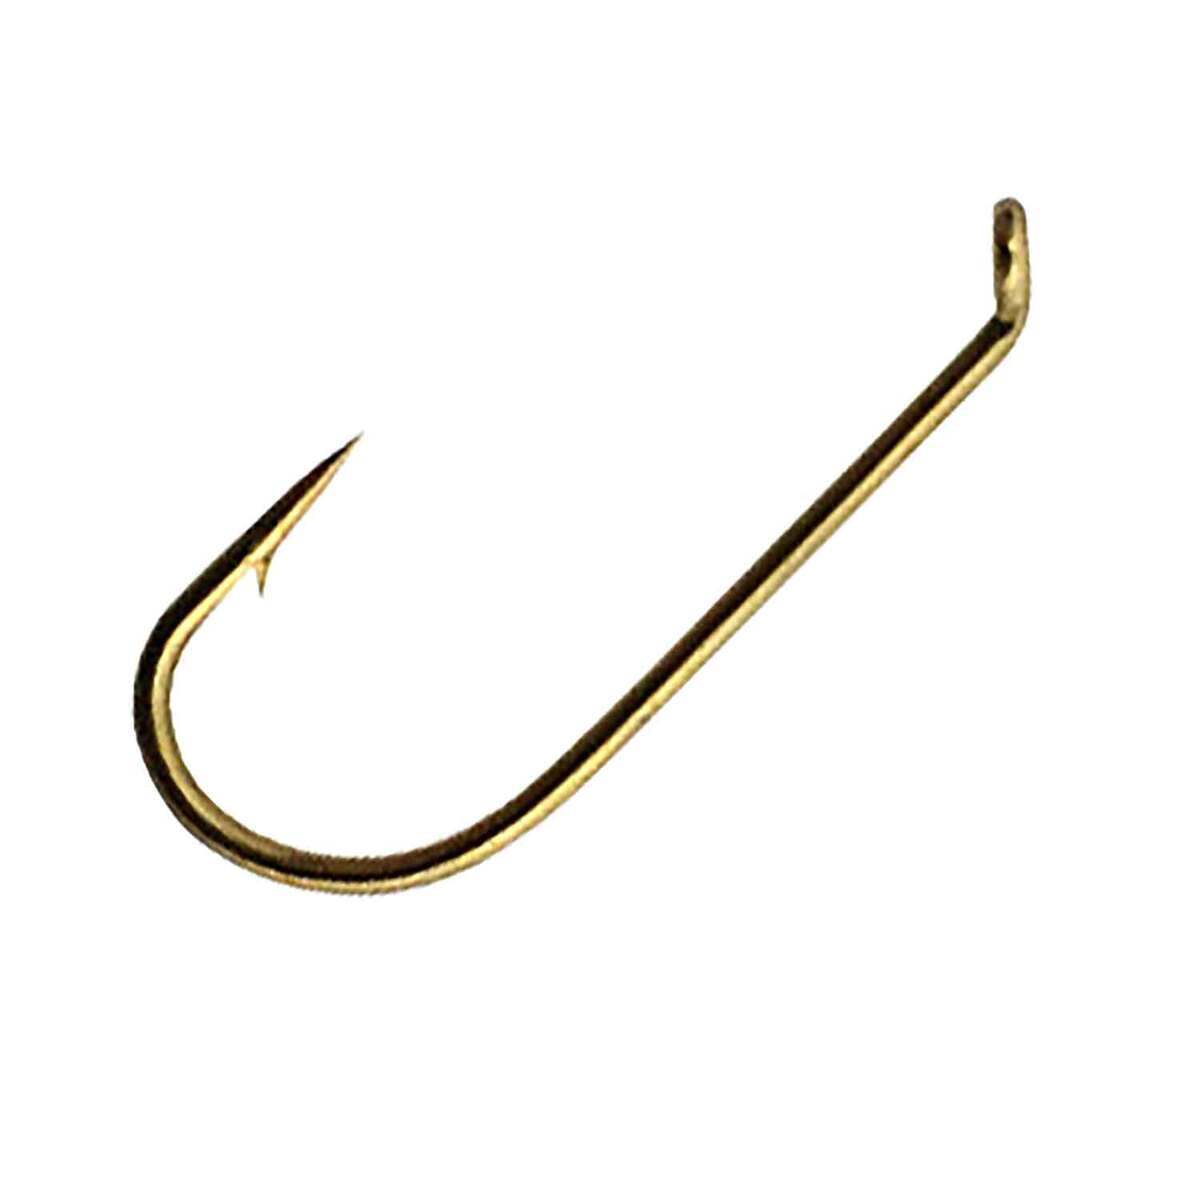  Daiichi Standard Dry Fly Hook, Mini Barb, Bronze Finish - 1180  - Size 10 : Sports & Outdoors